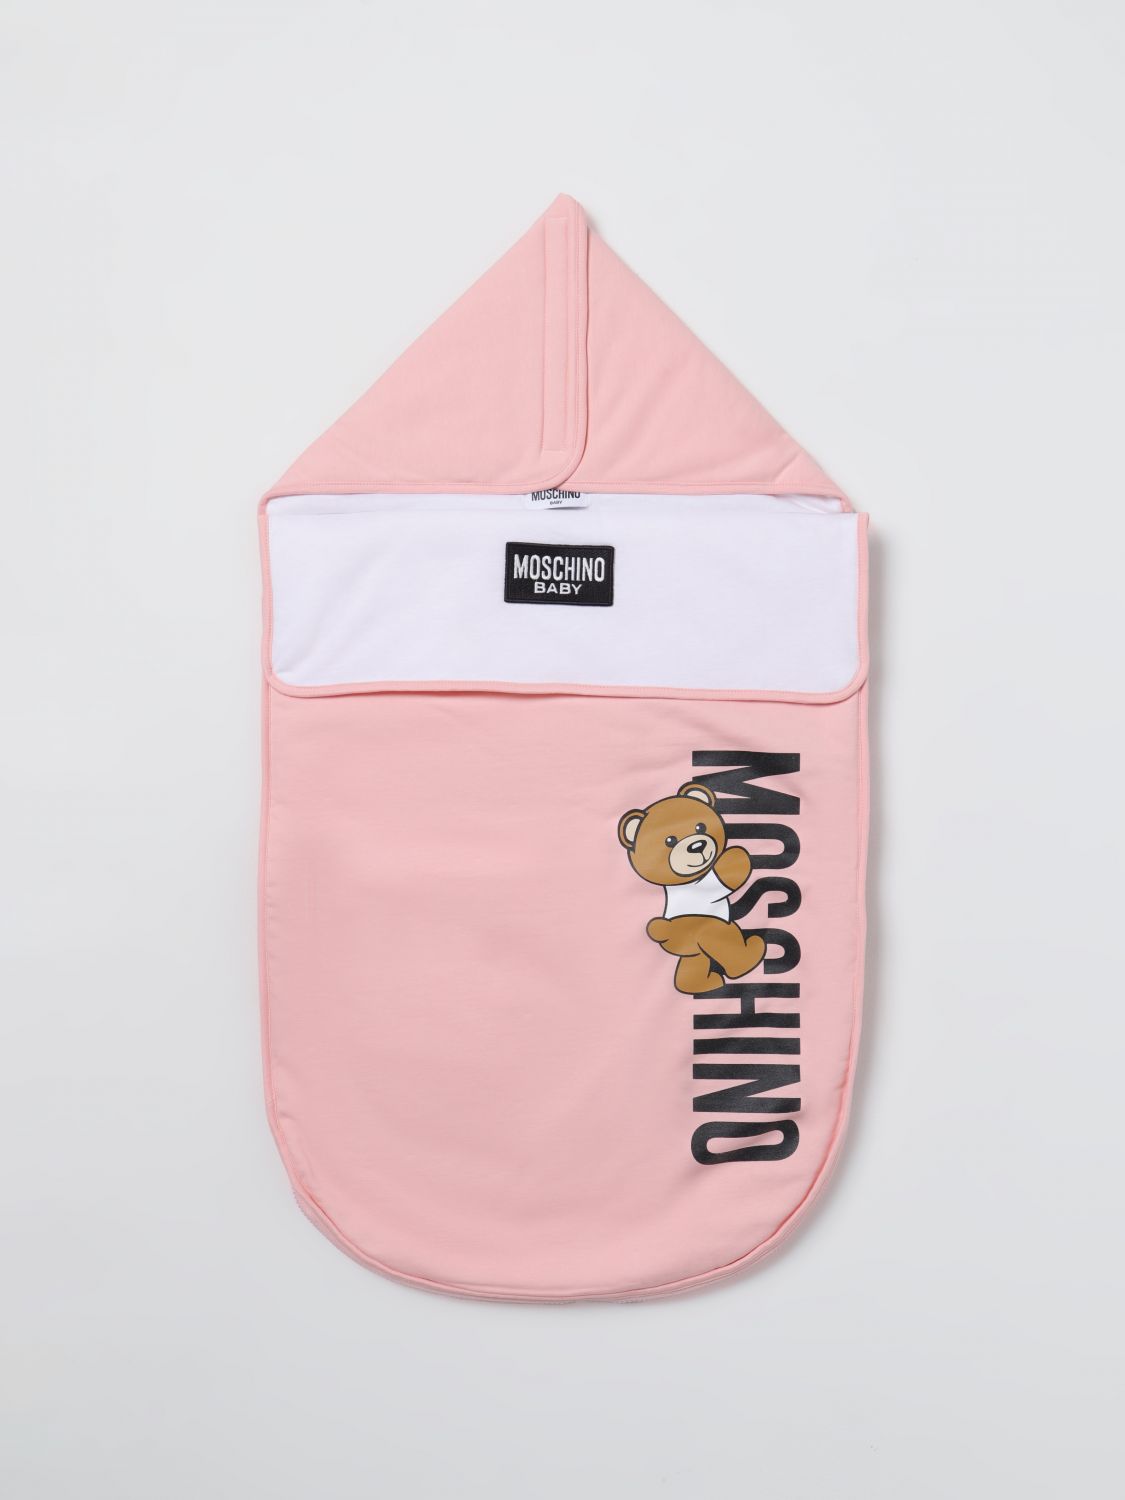 Moschino Baby Blanket Set MOSCHINO BABY Kids colour Pink